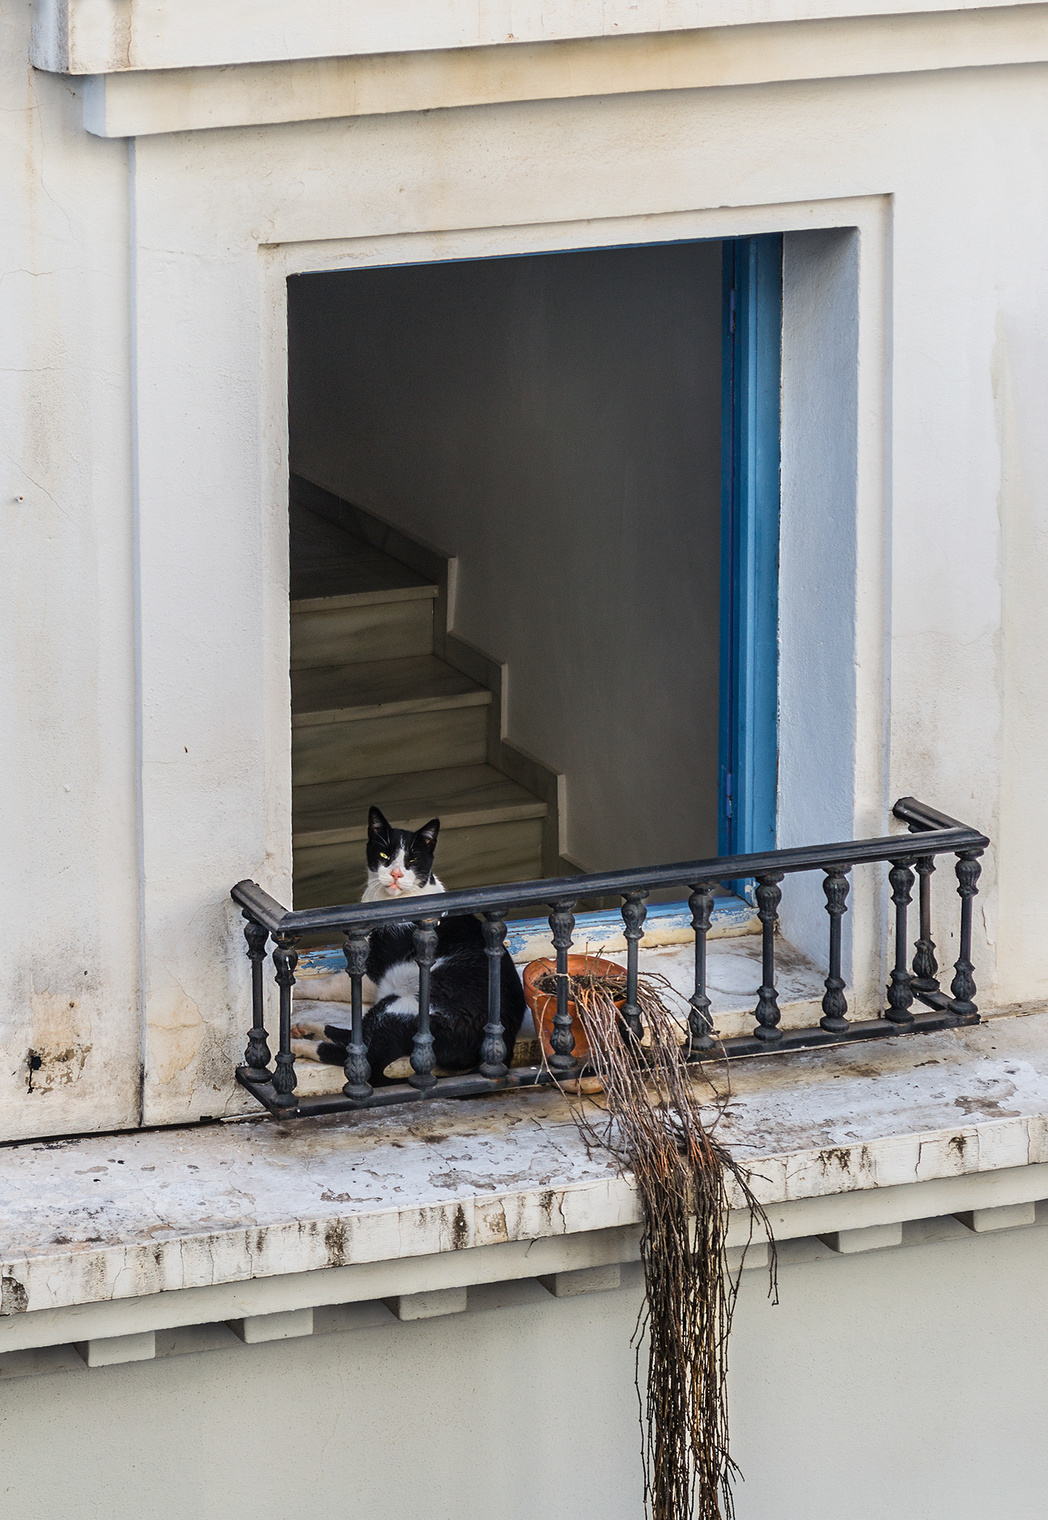 ФС А из нашего окошка - на чужом балконе кошка